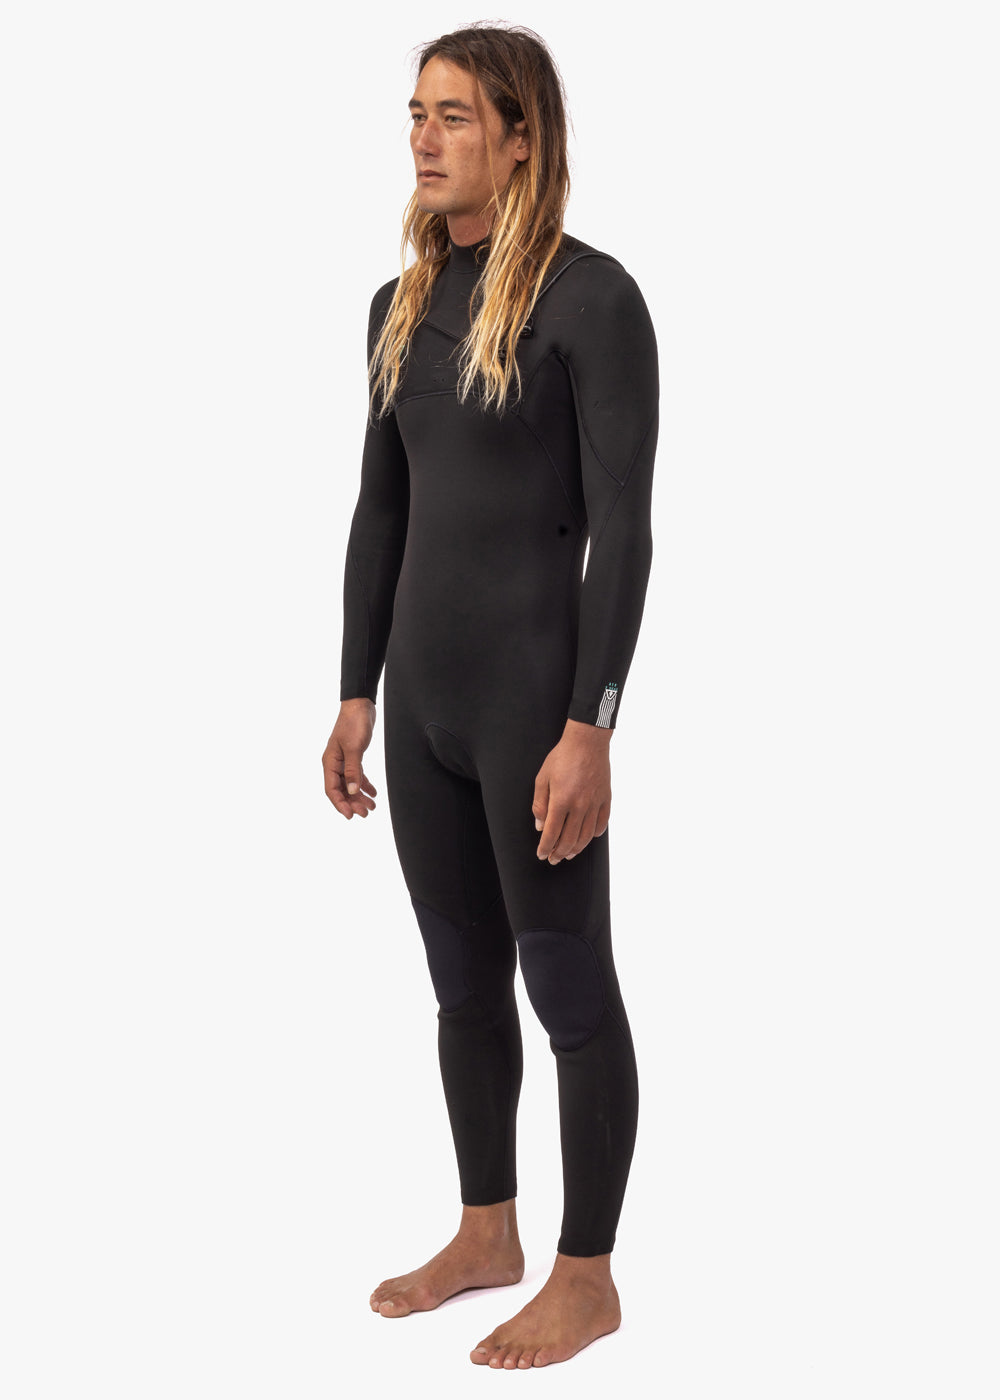 7 Seas 4-3 Full Chest Zip Wetsuit - Black with Jade Logos